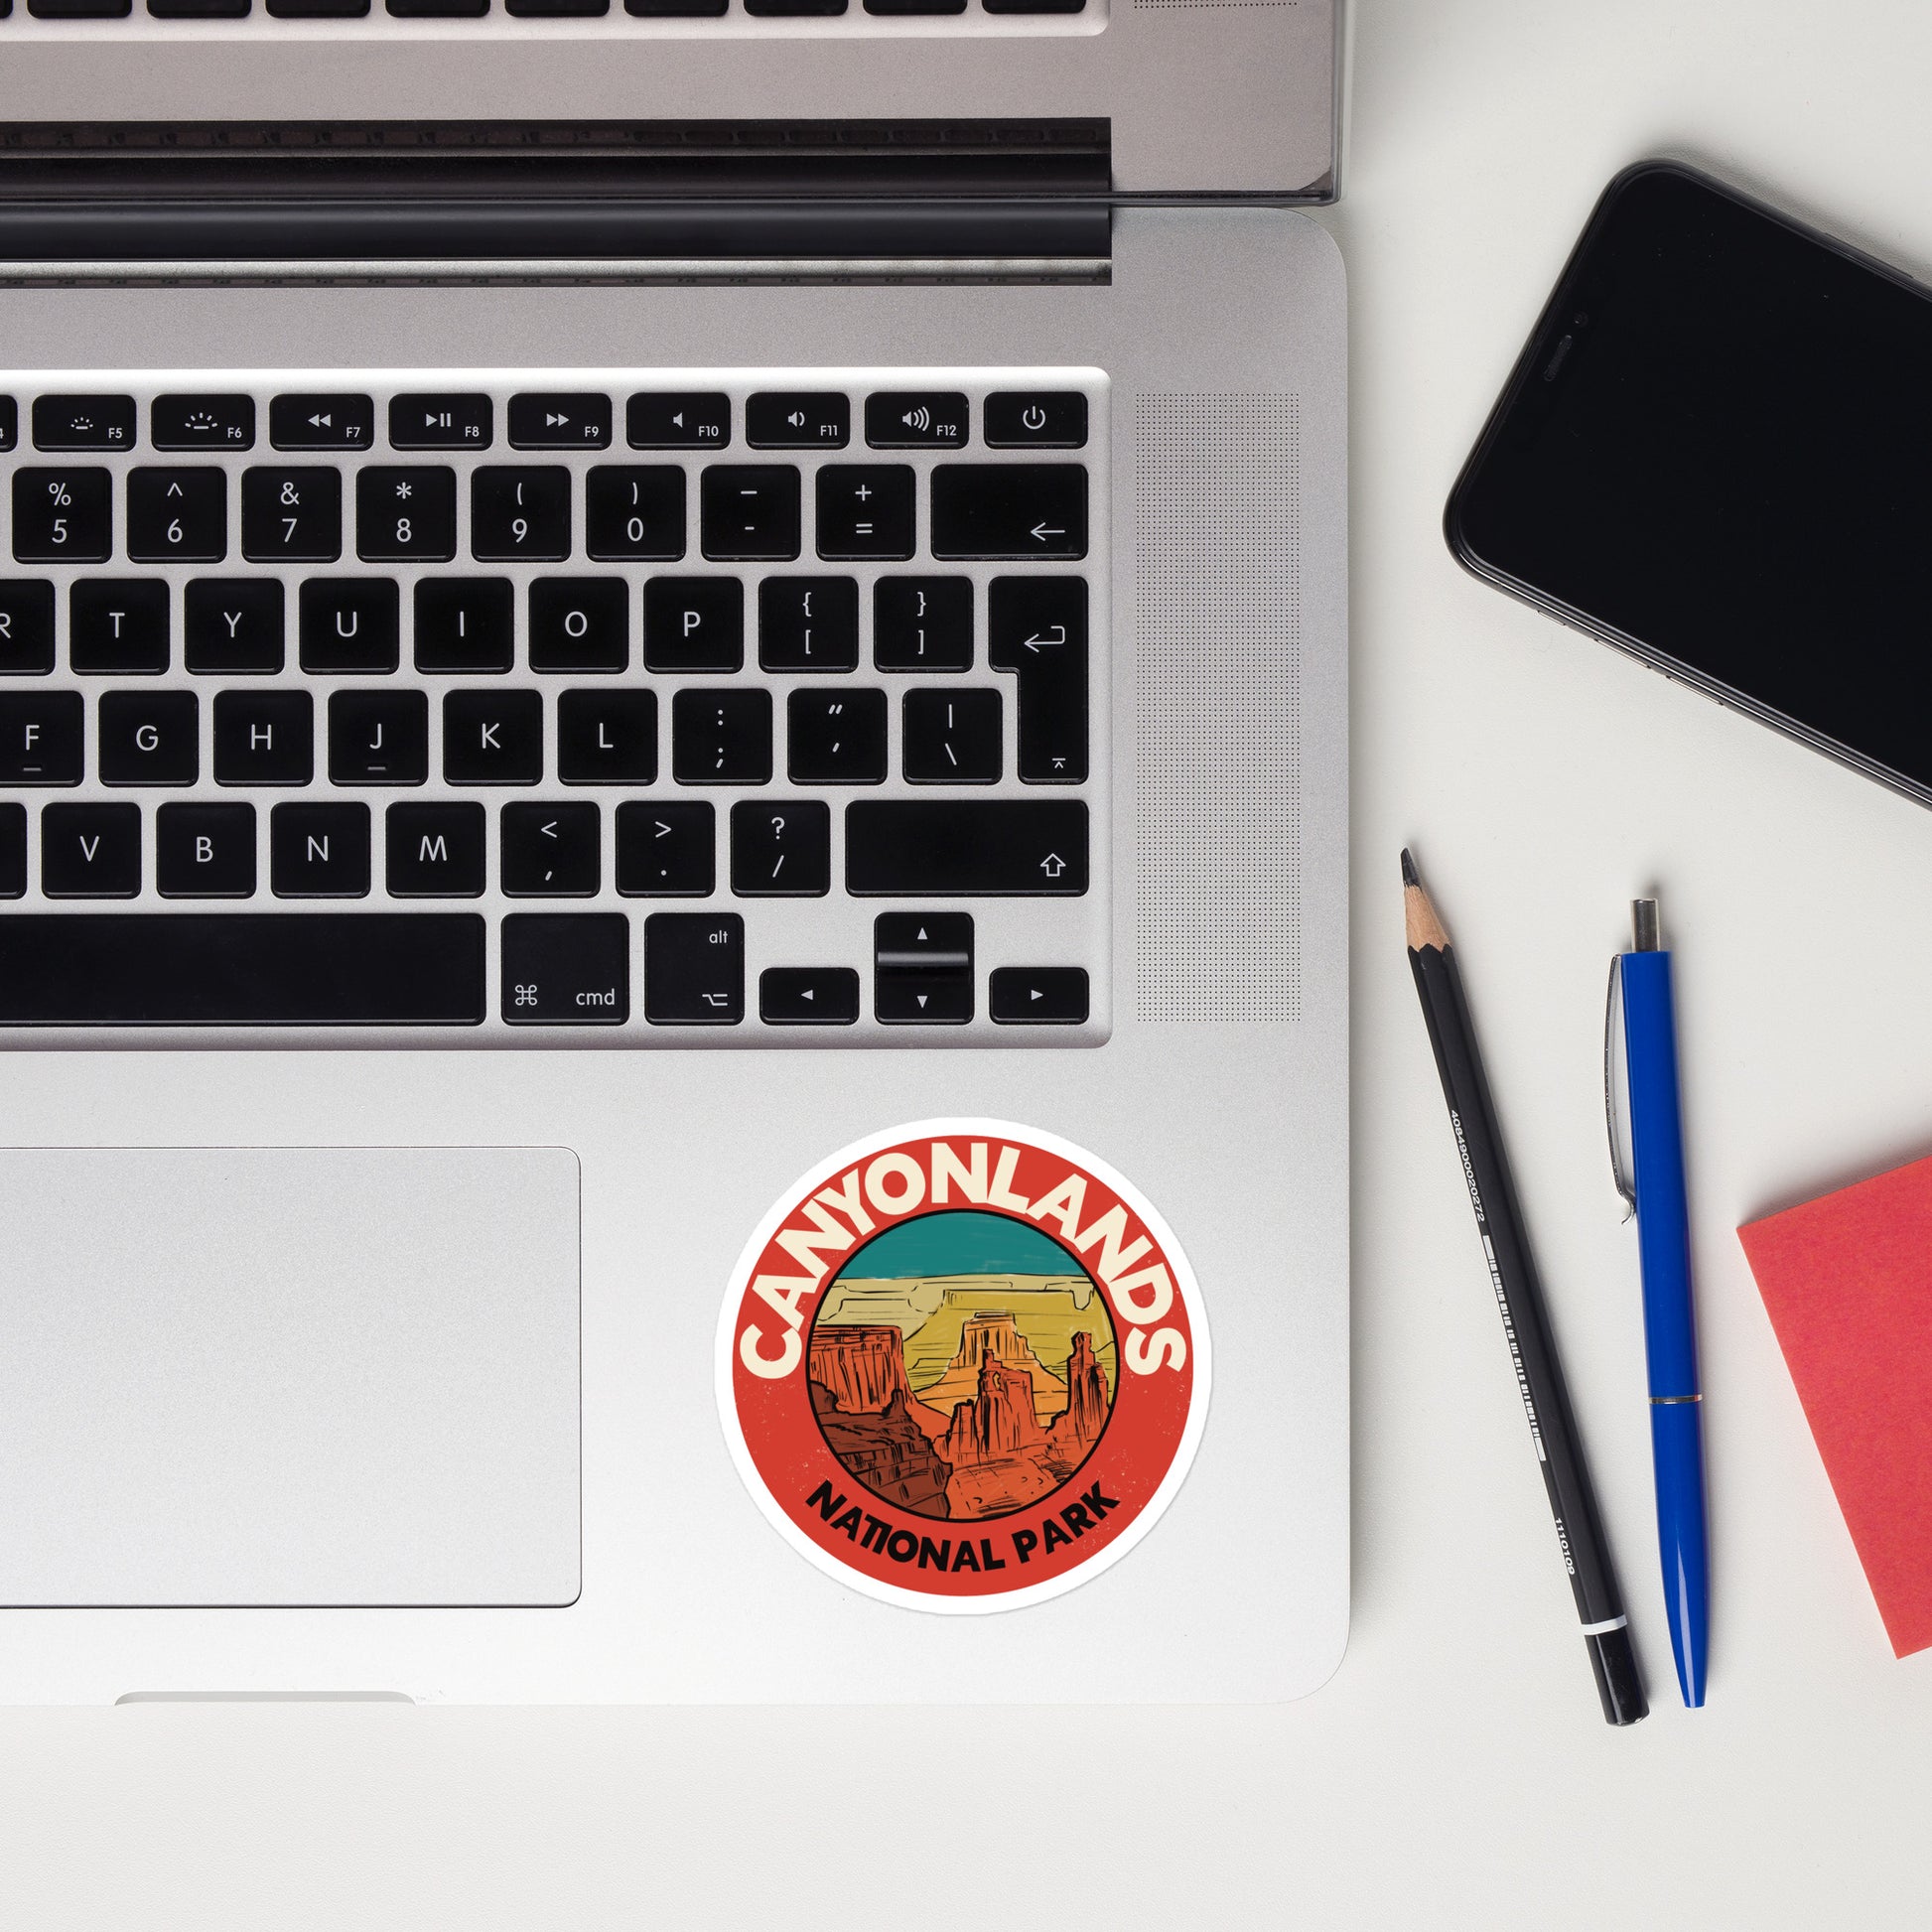 A sticker of Canyonlands National Park on a laptop